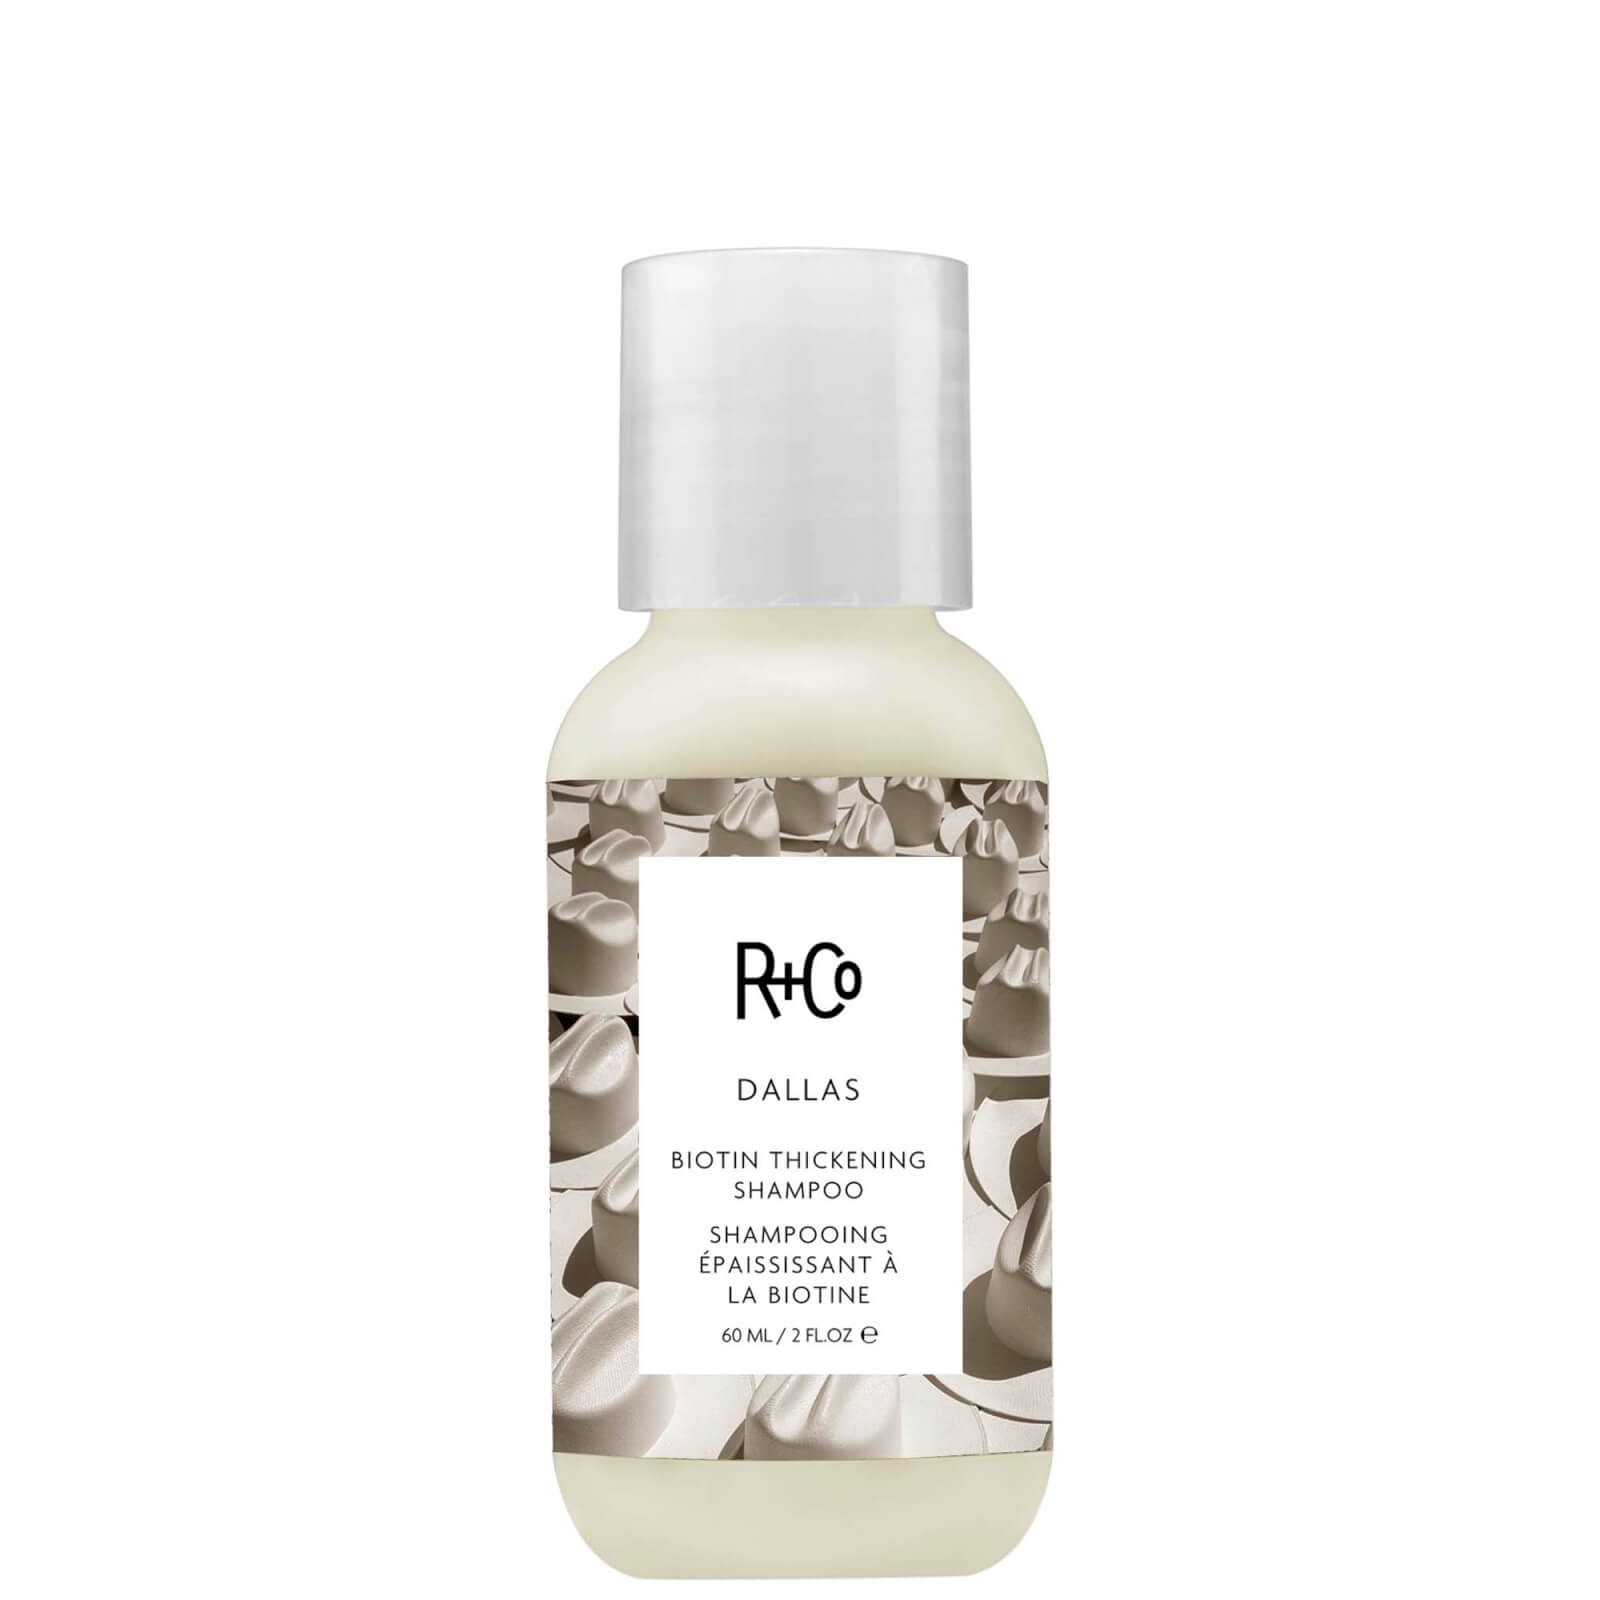 R+Co DALLAS Biotin Thickening Shampoo 2 fl. oz